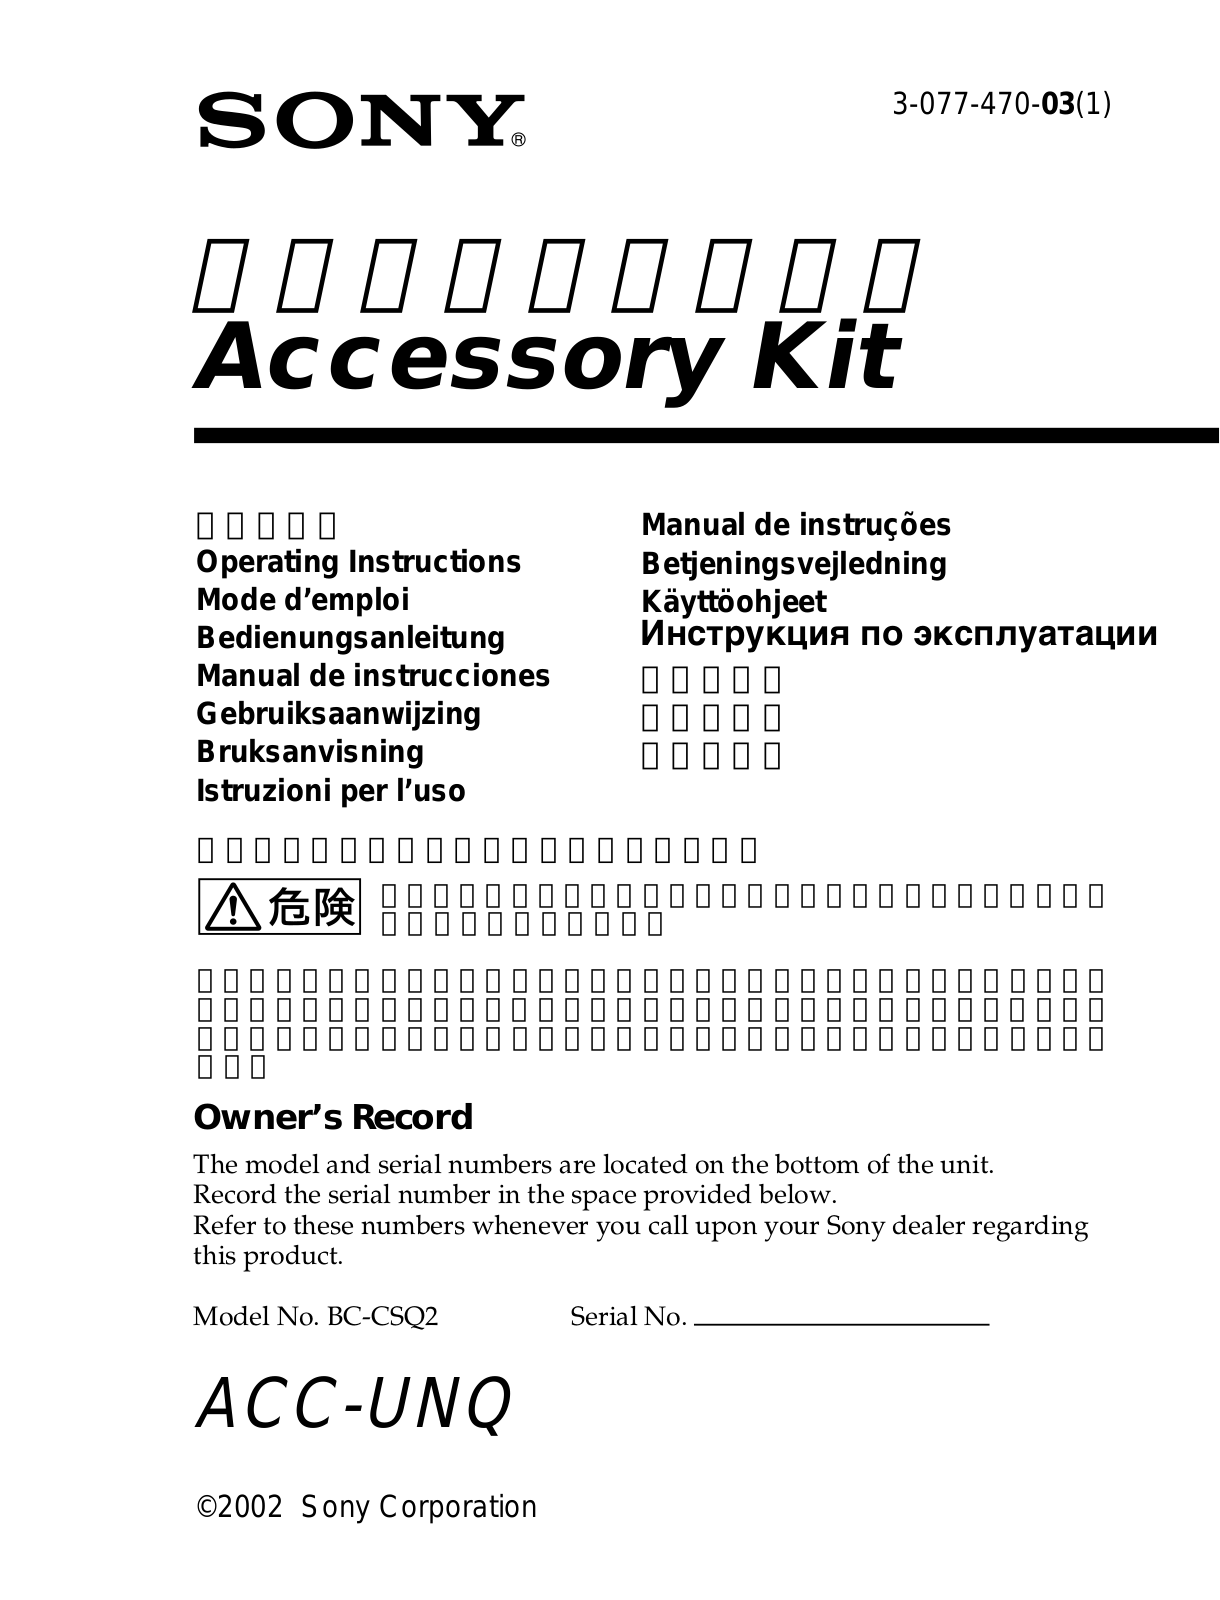 Sony ACC-UNQ User Manual